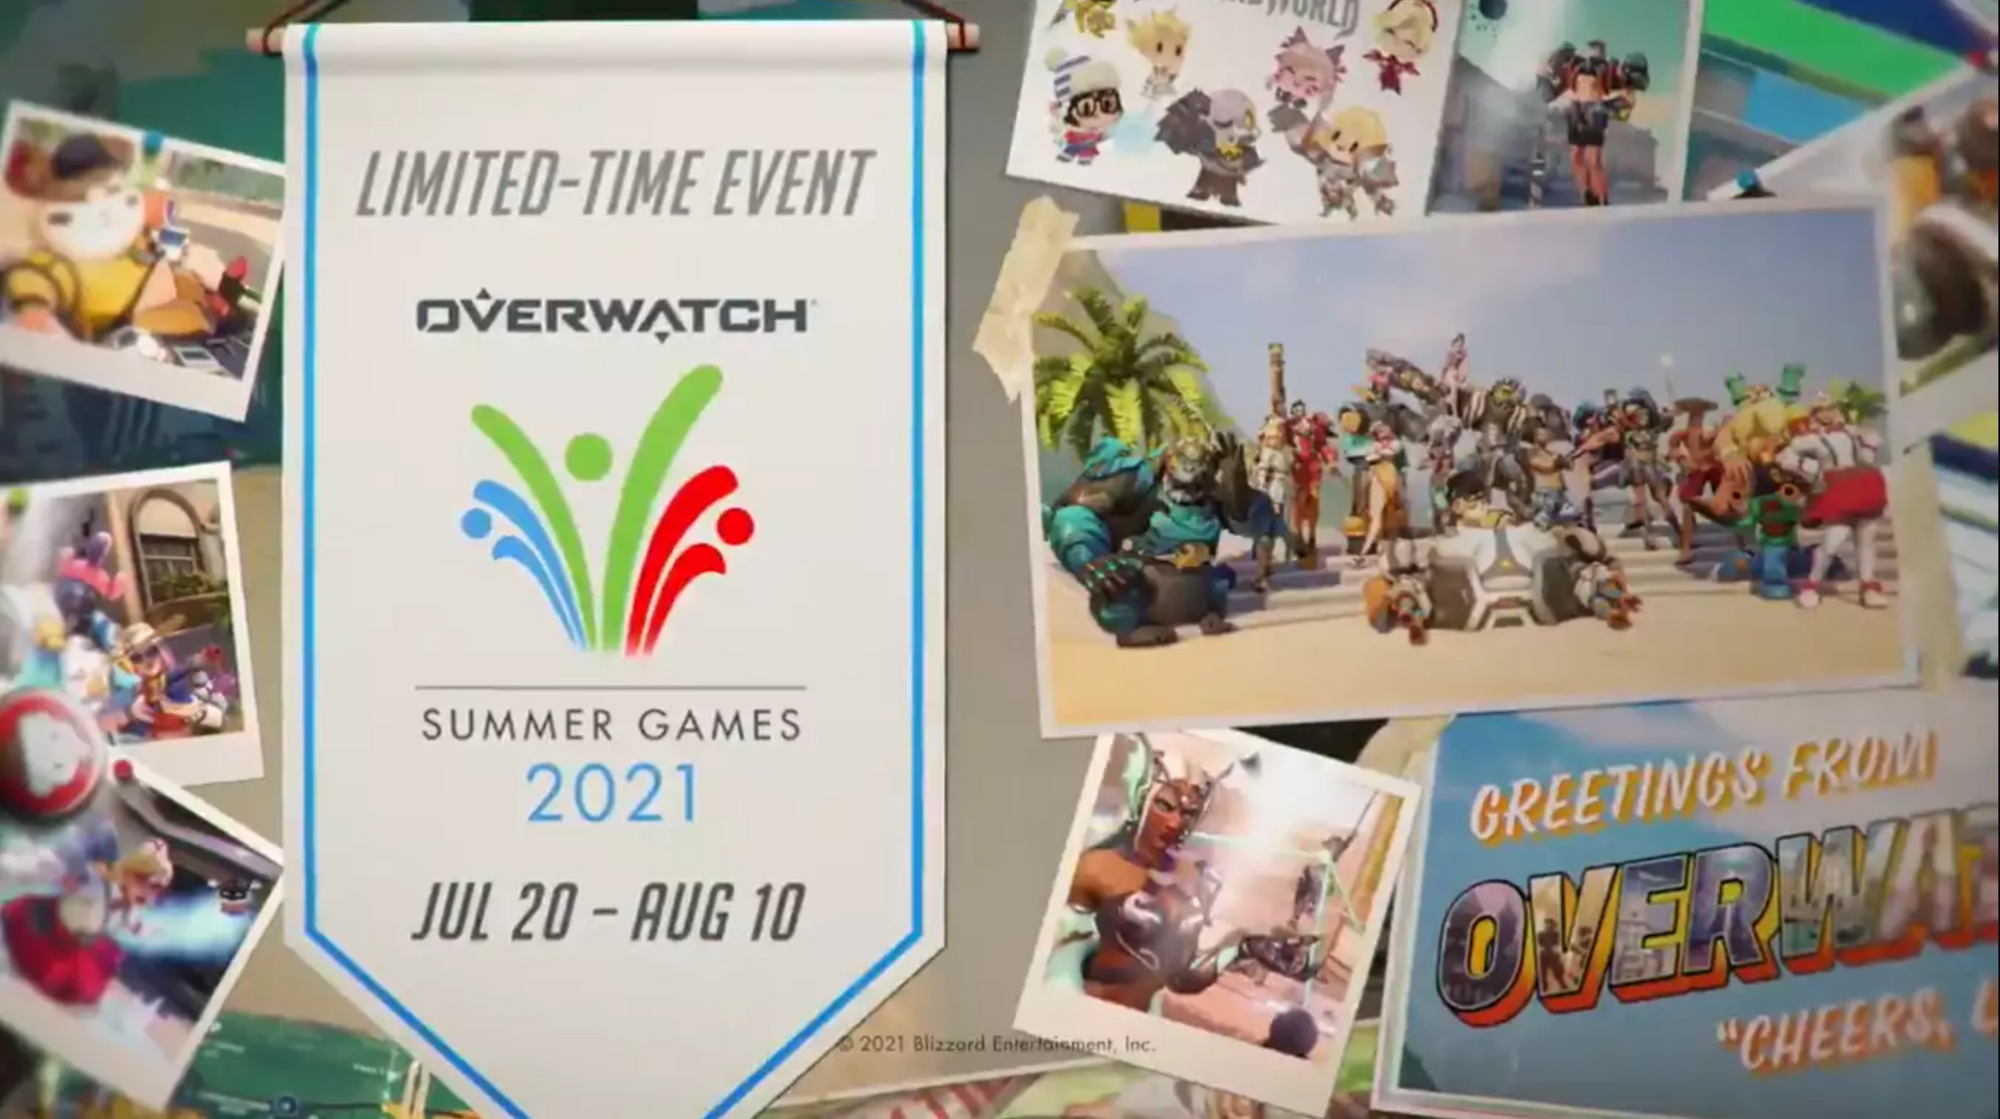 Overwatch Summer Games Announced